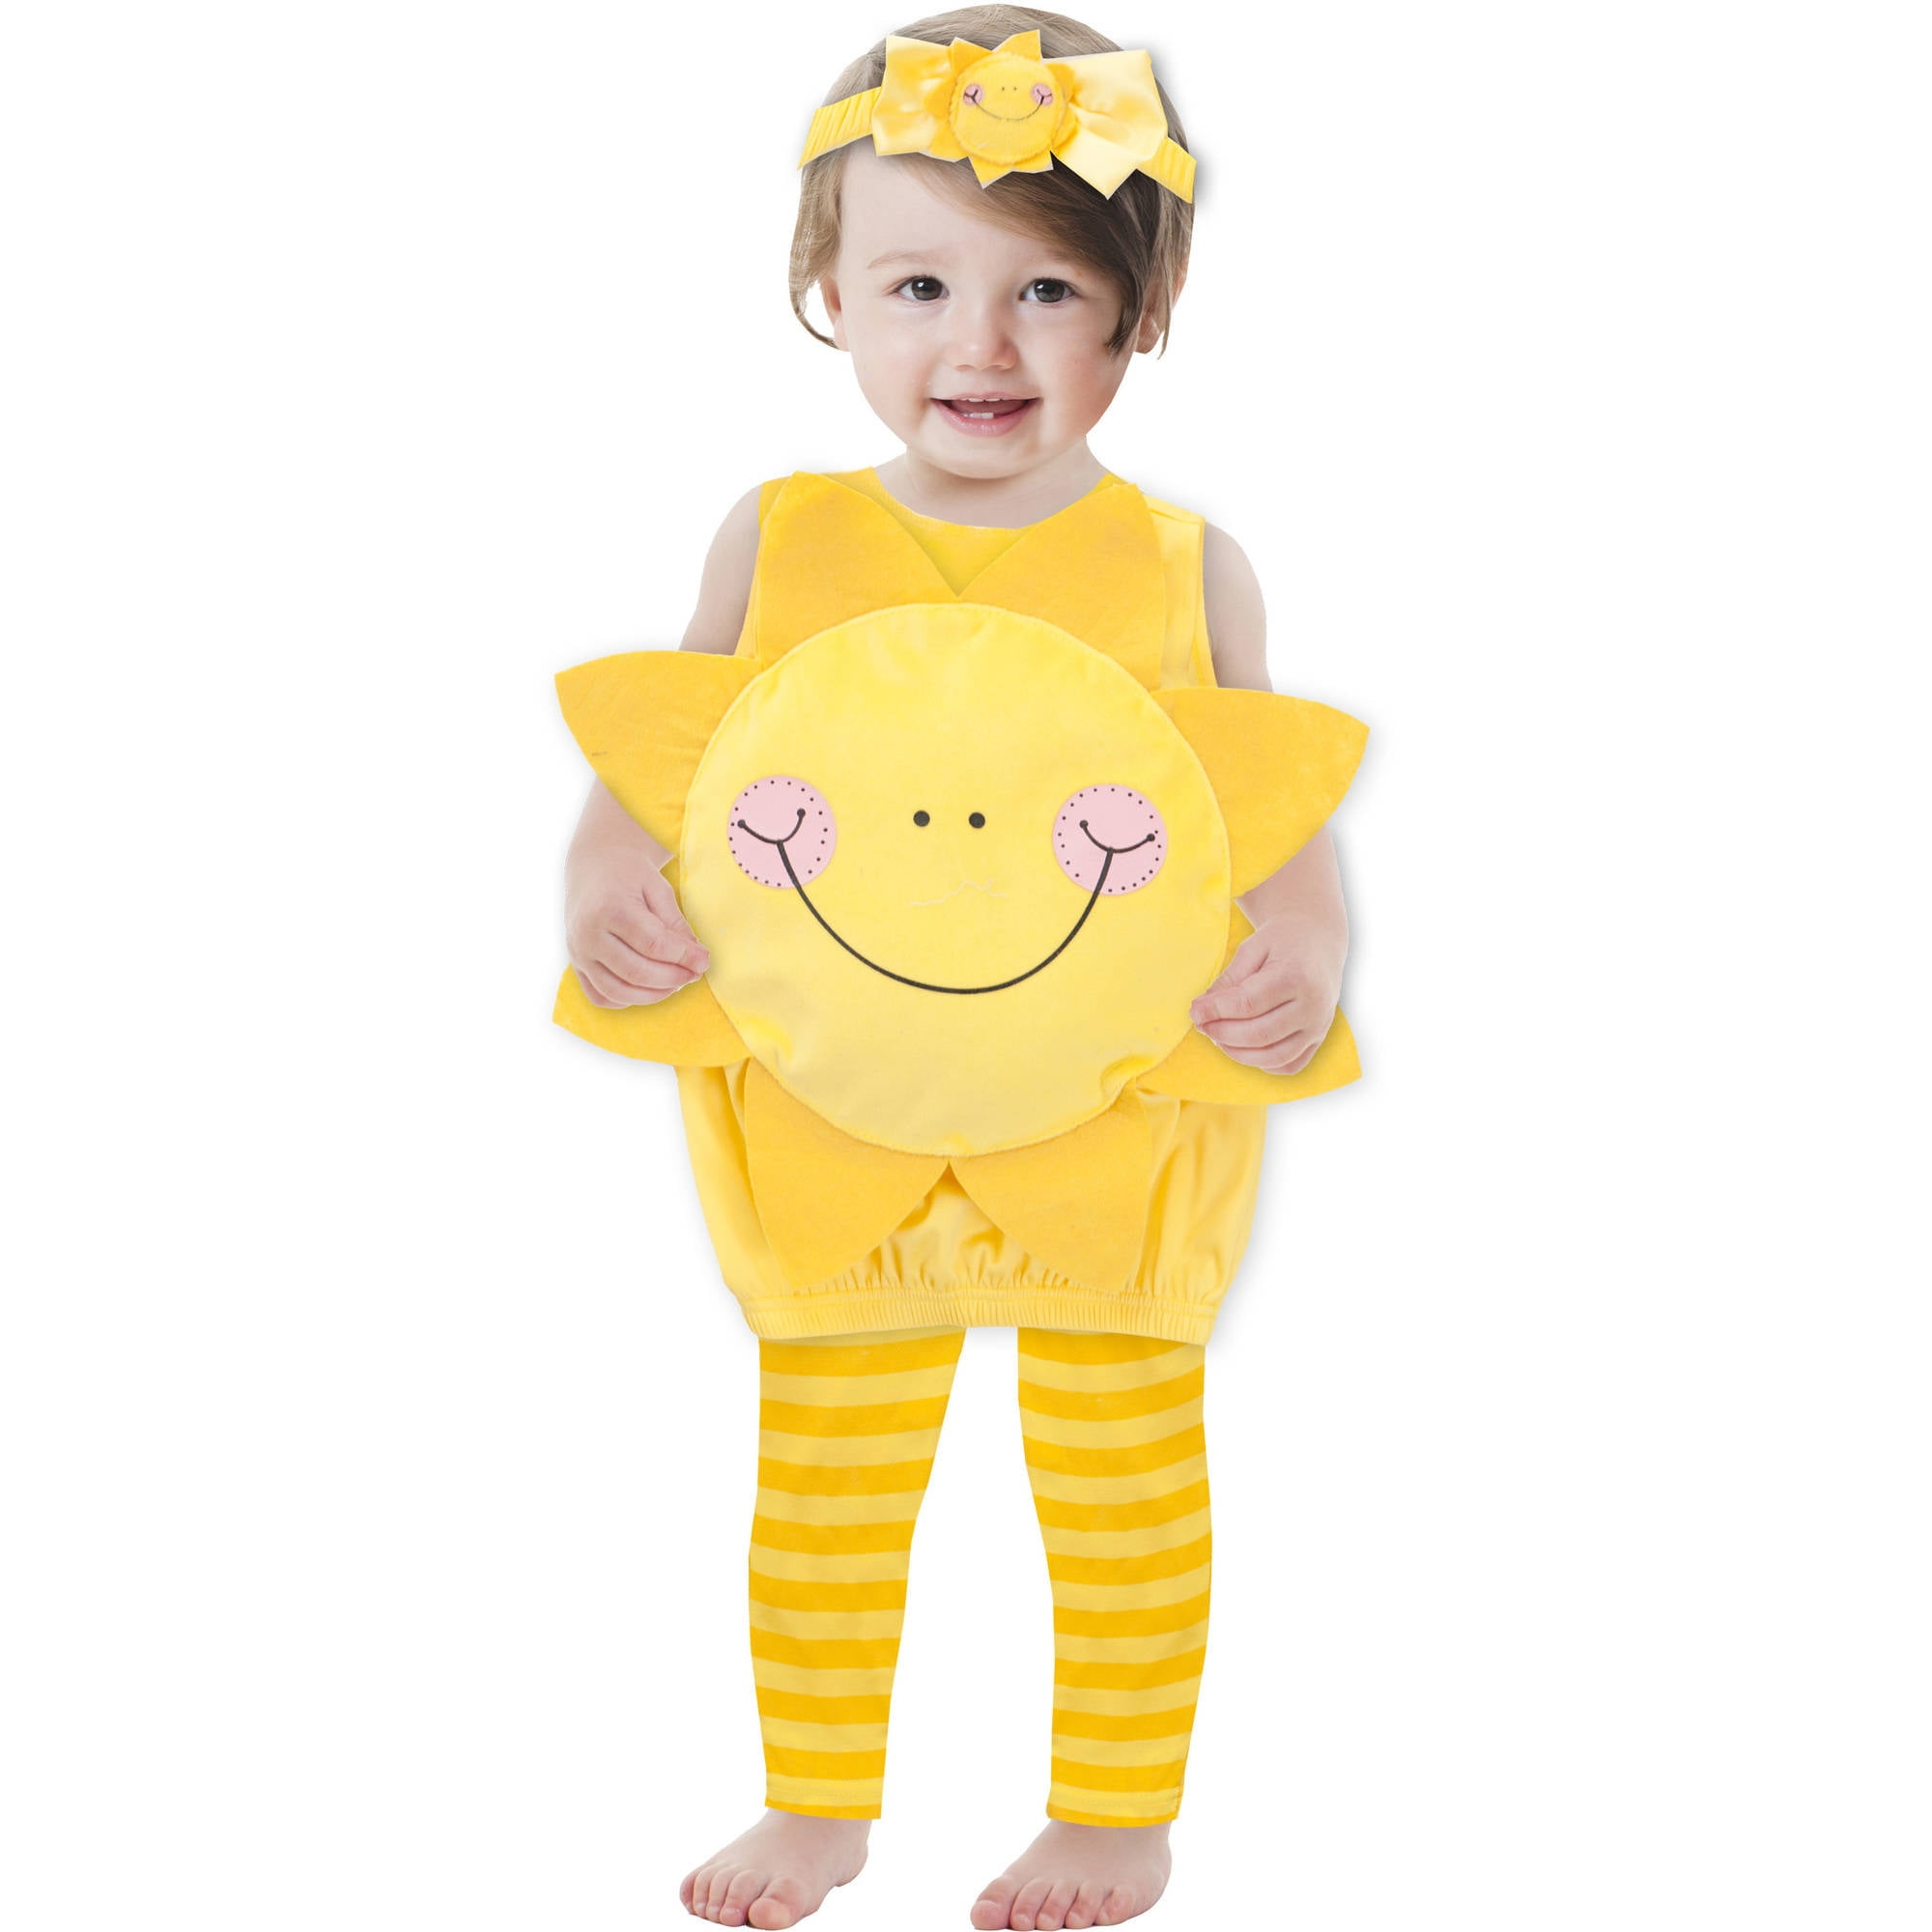 Little Sunshine Infant Halloween Costume - Walmart.com